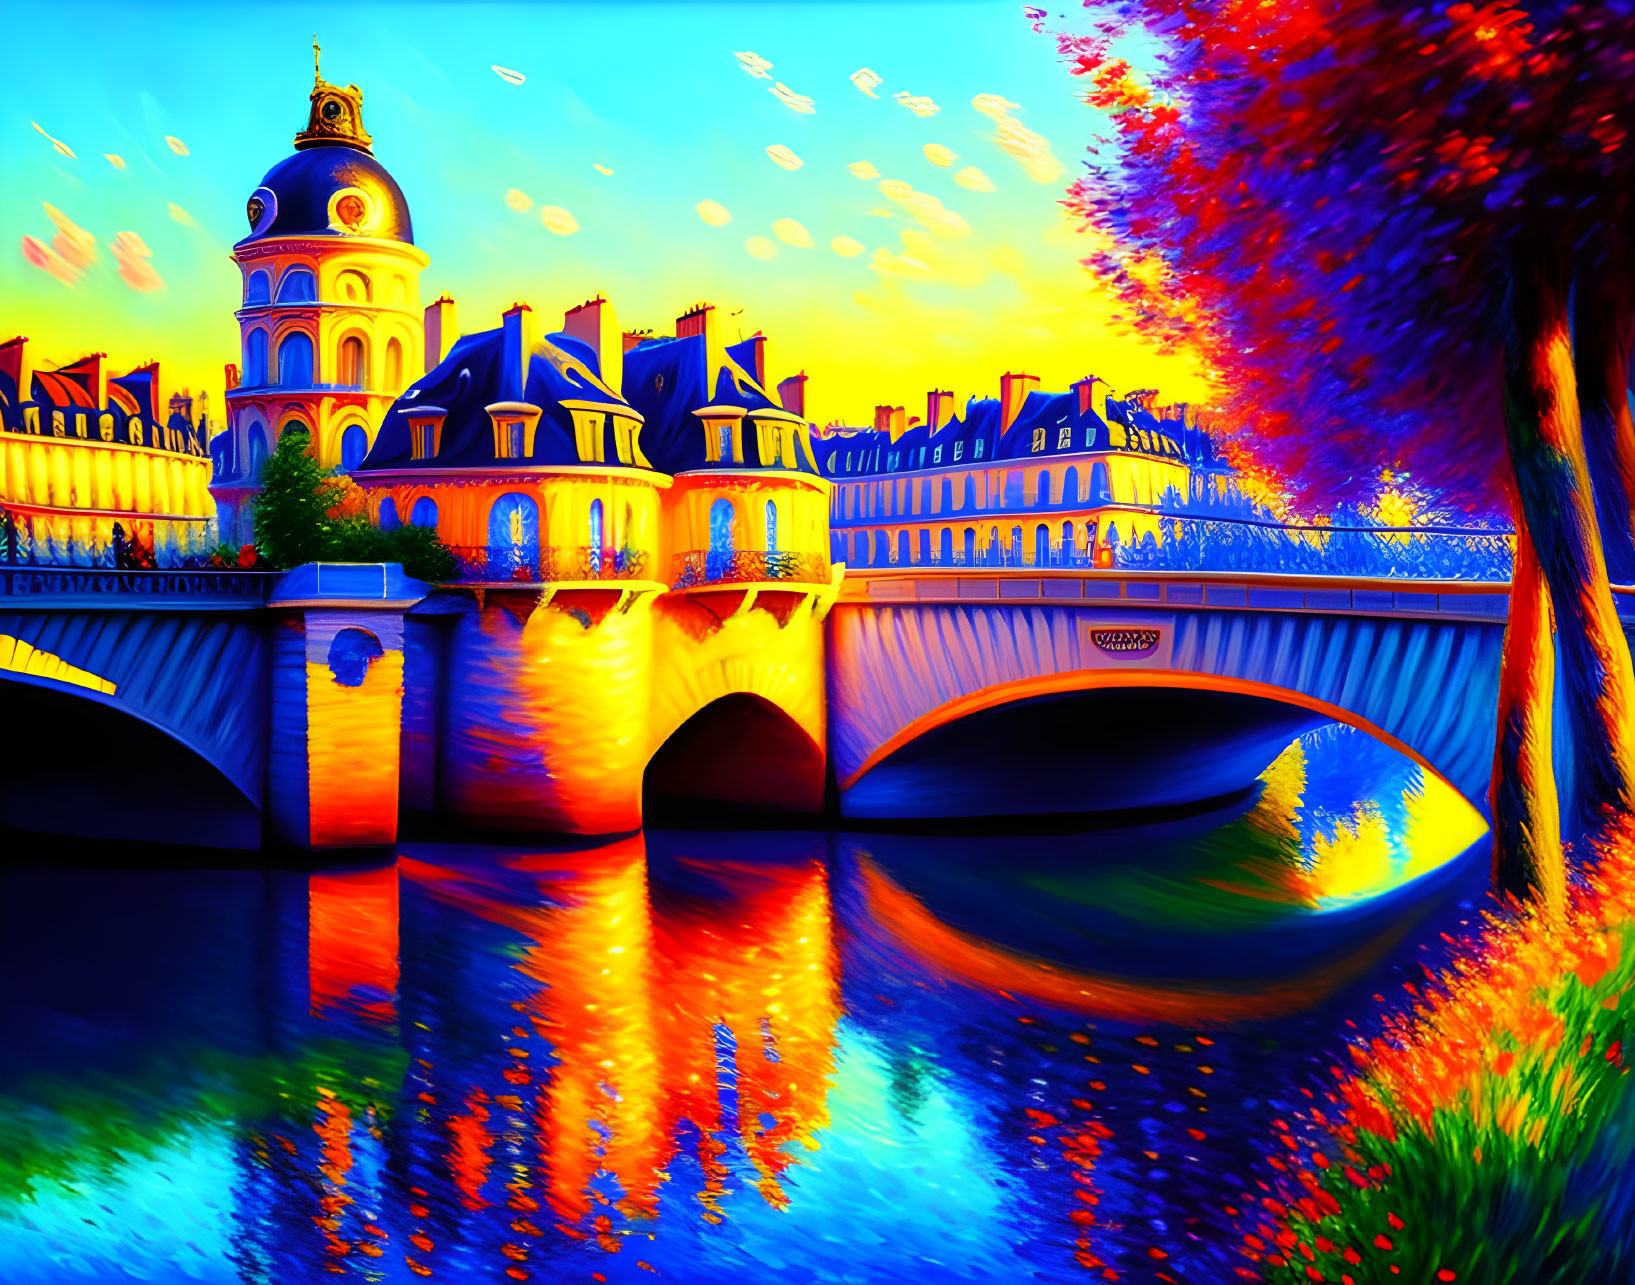 Stylized painting of Parisian riverside at sunset